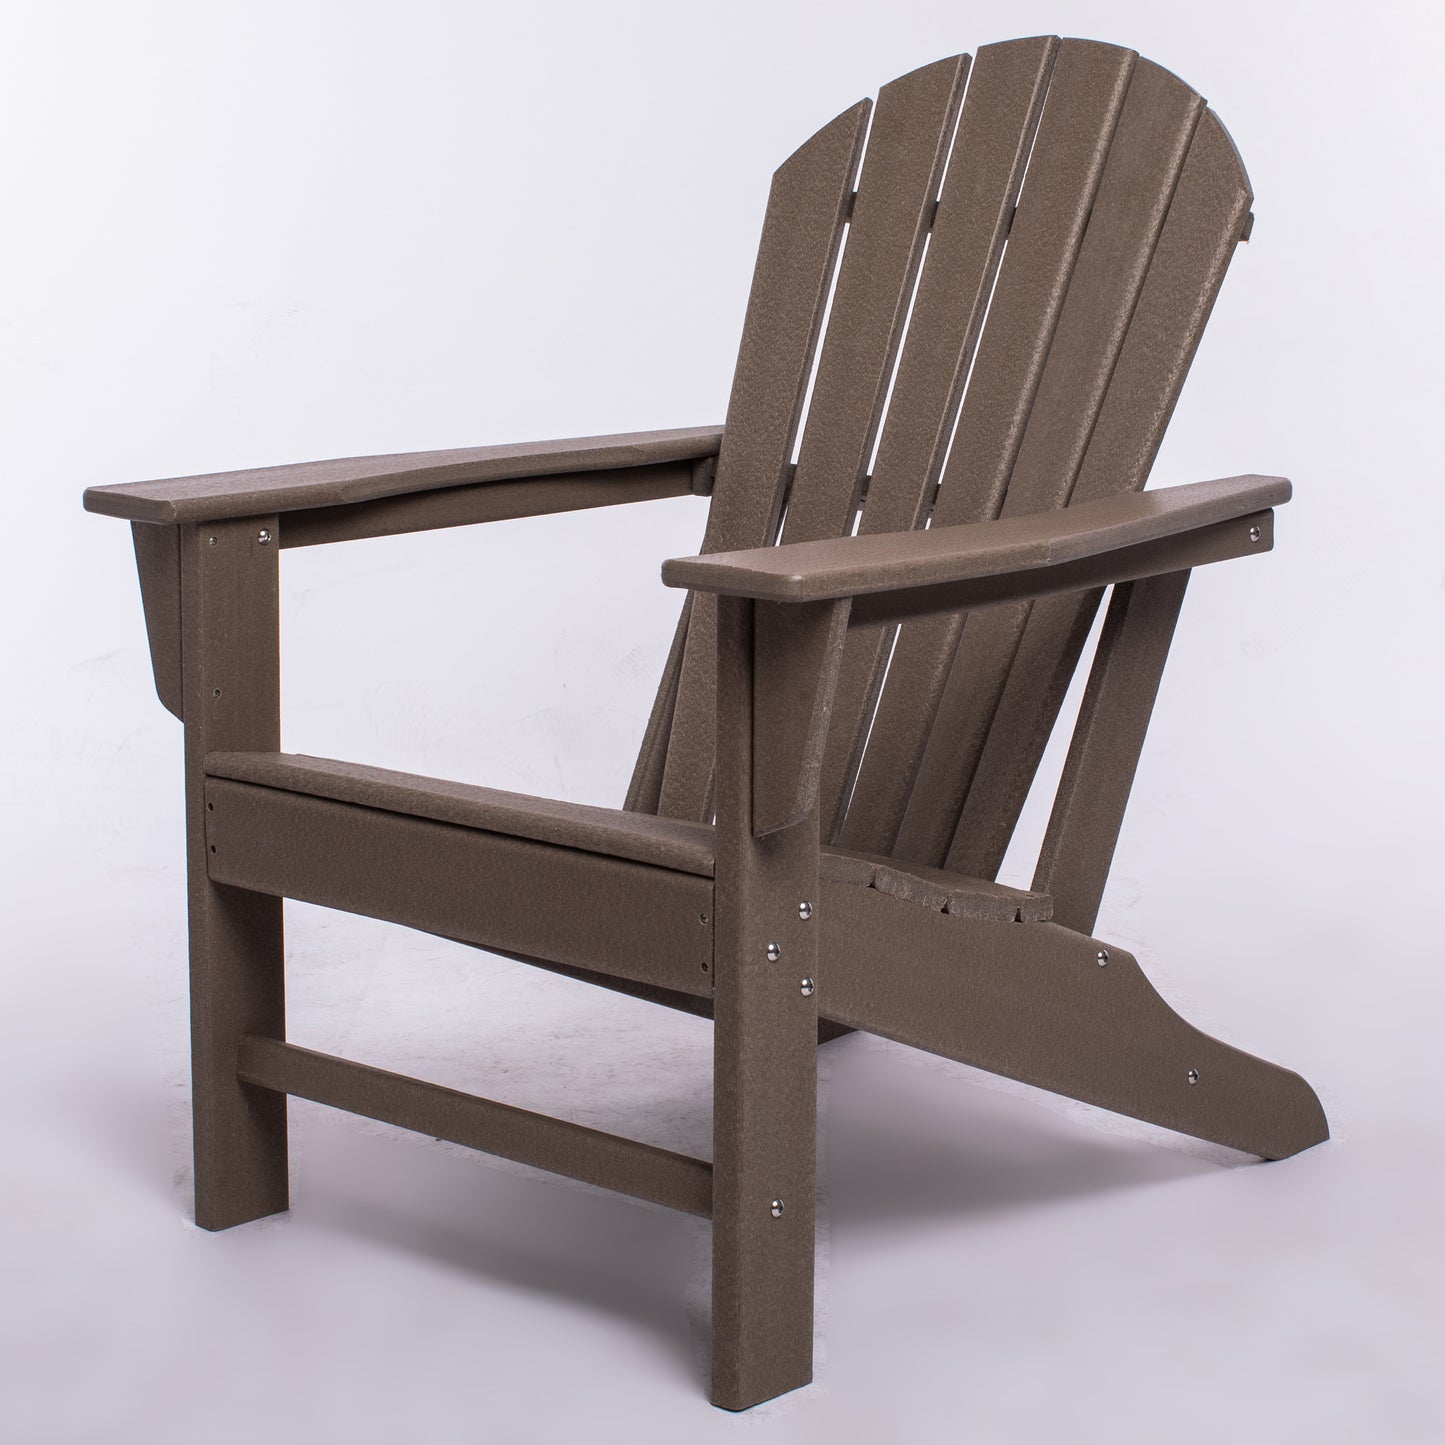 UM HDPE Resin Wood Adirondack Chair - Dark Brown